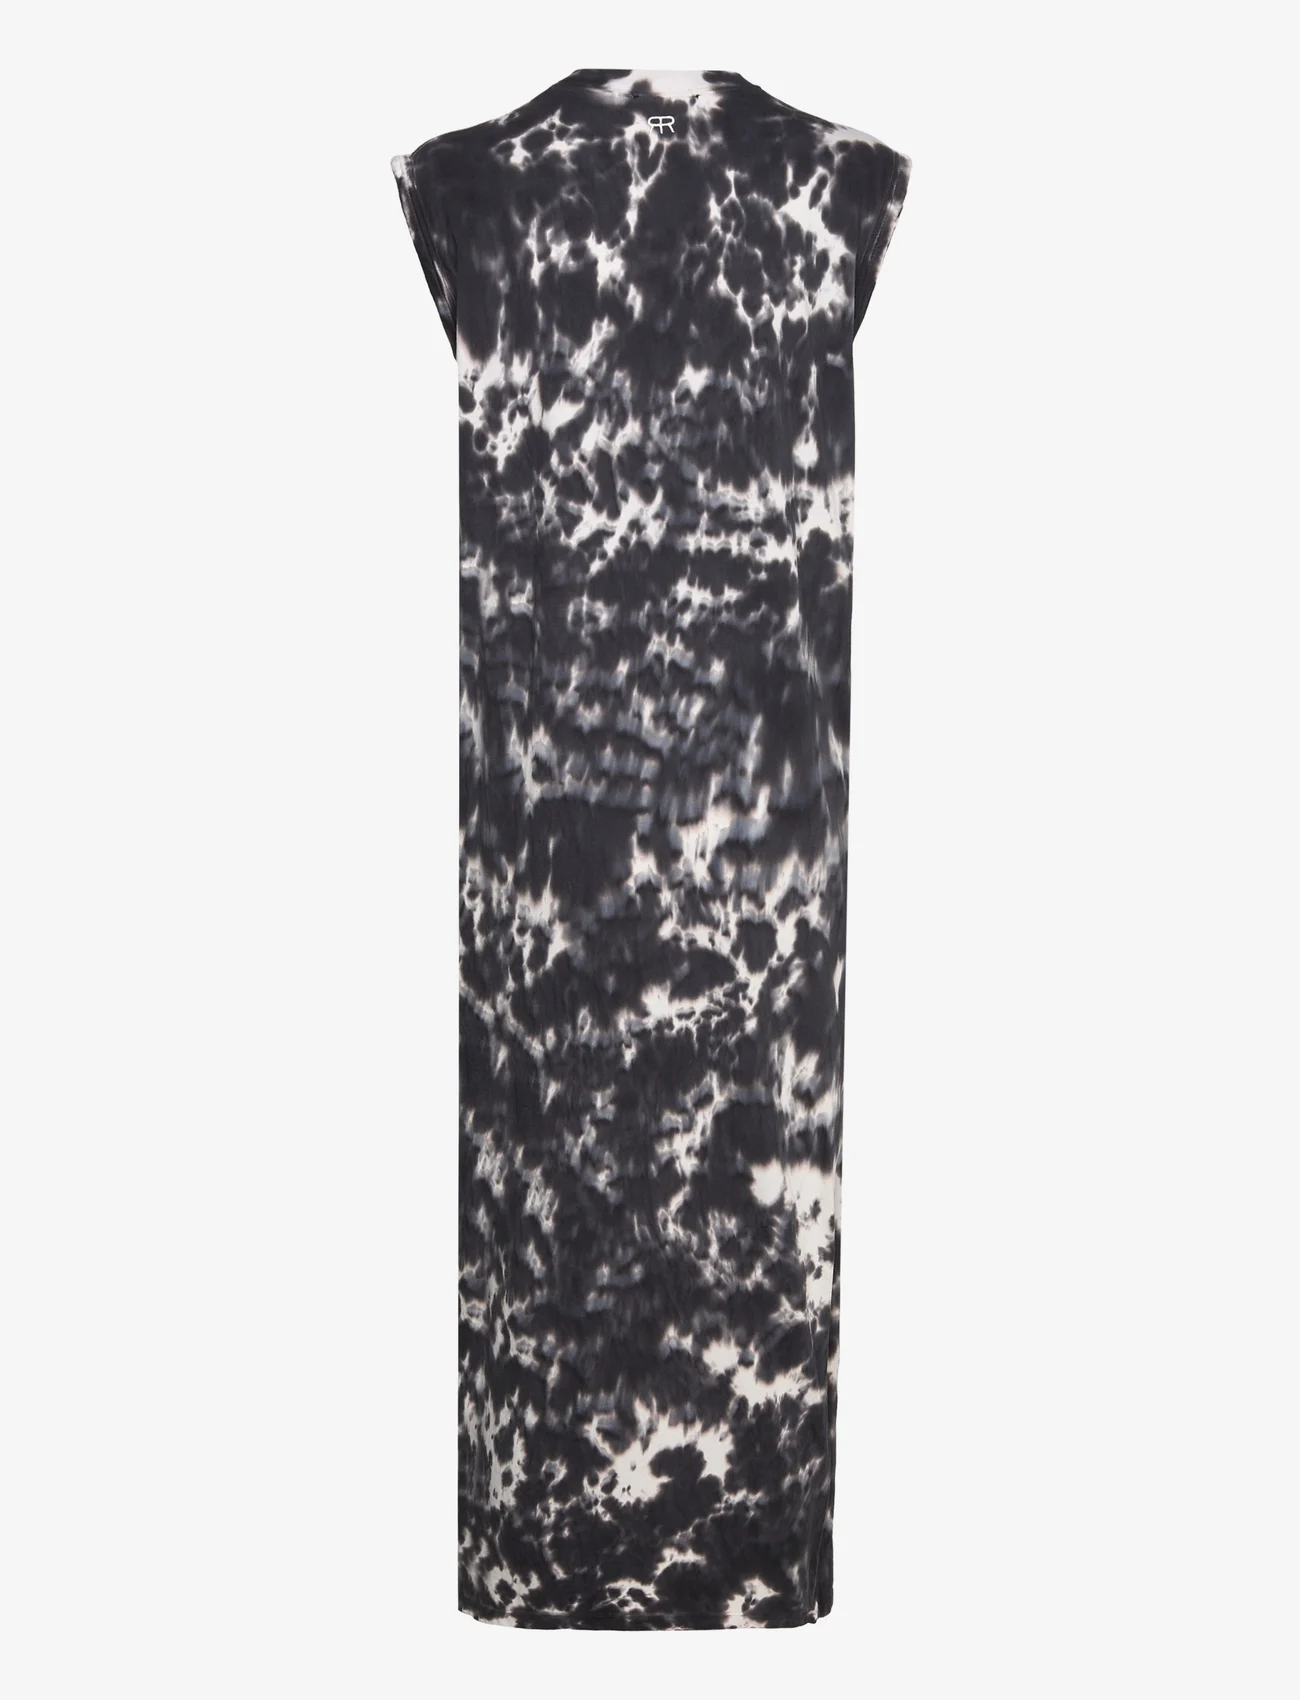 ROSEANNA - DRESS PACIFIC  JERSEY LIPS - t-shirt dresses - charcoal - 1